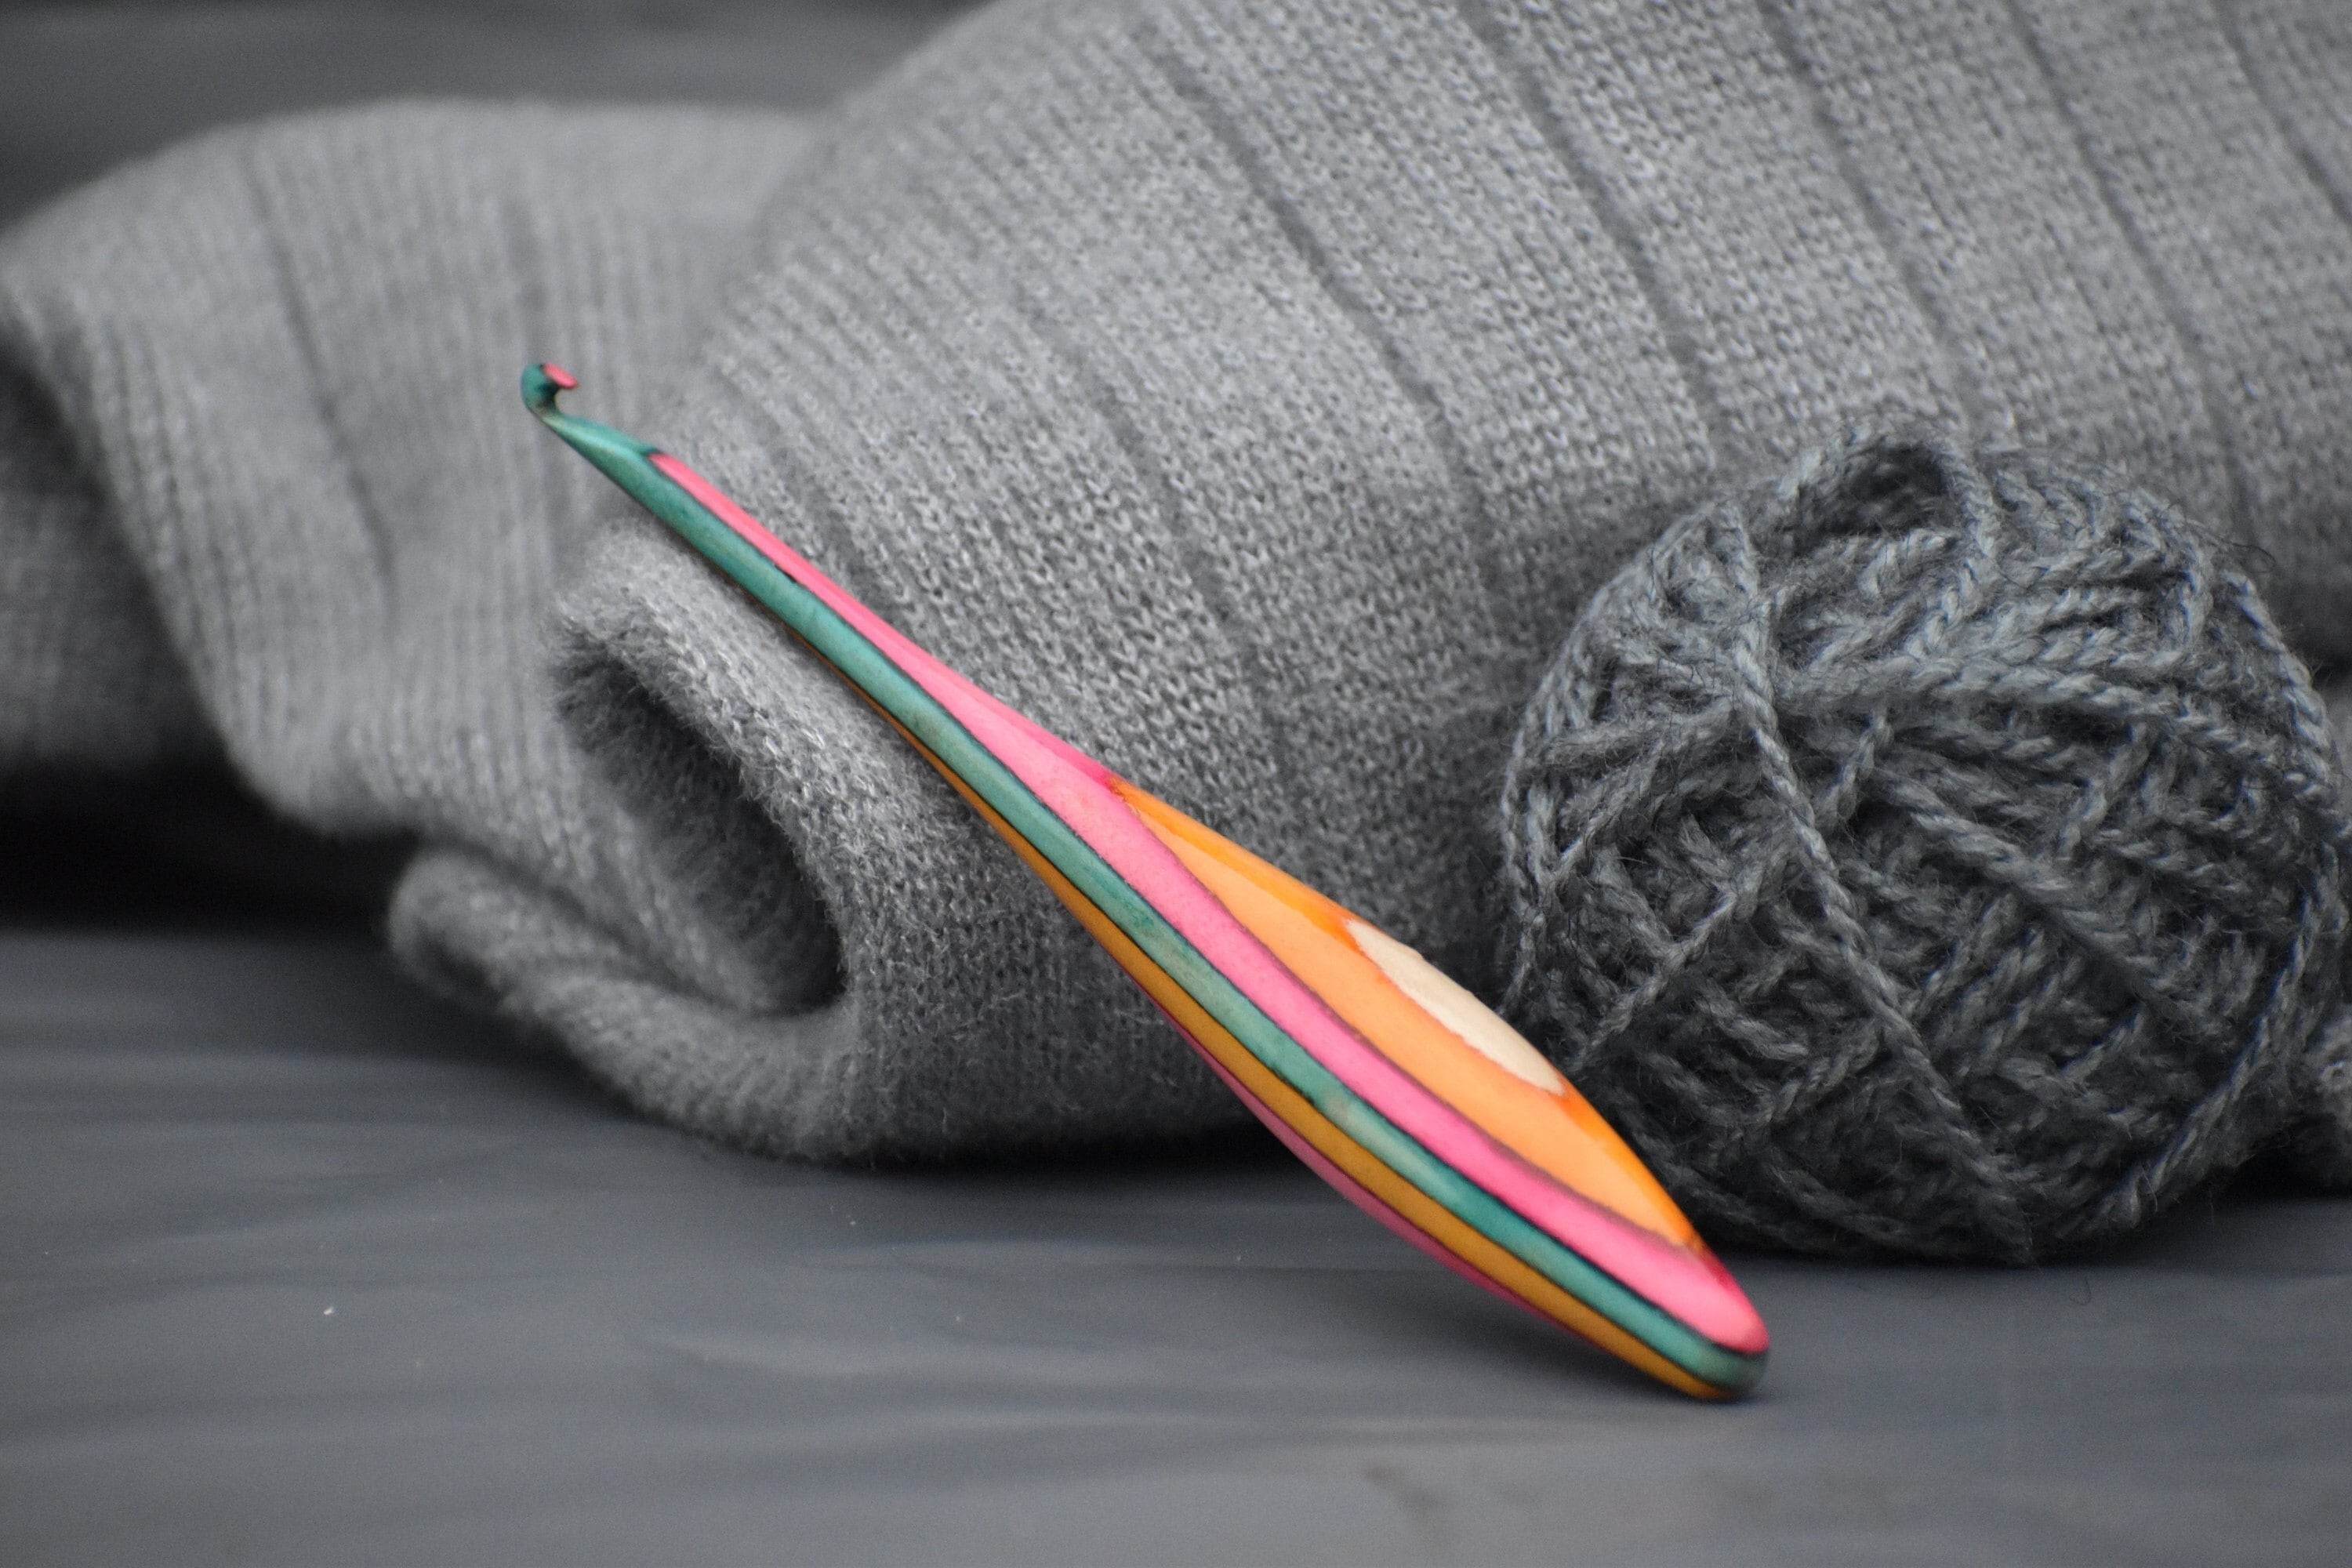 Lykke INDIGO Interchangeable Knitting Needles 5'' Blue Wood Needles for Knitting  Interchangeable Tips for Circular Needles 